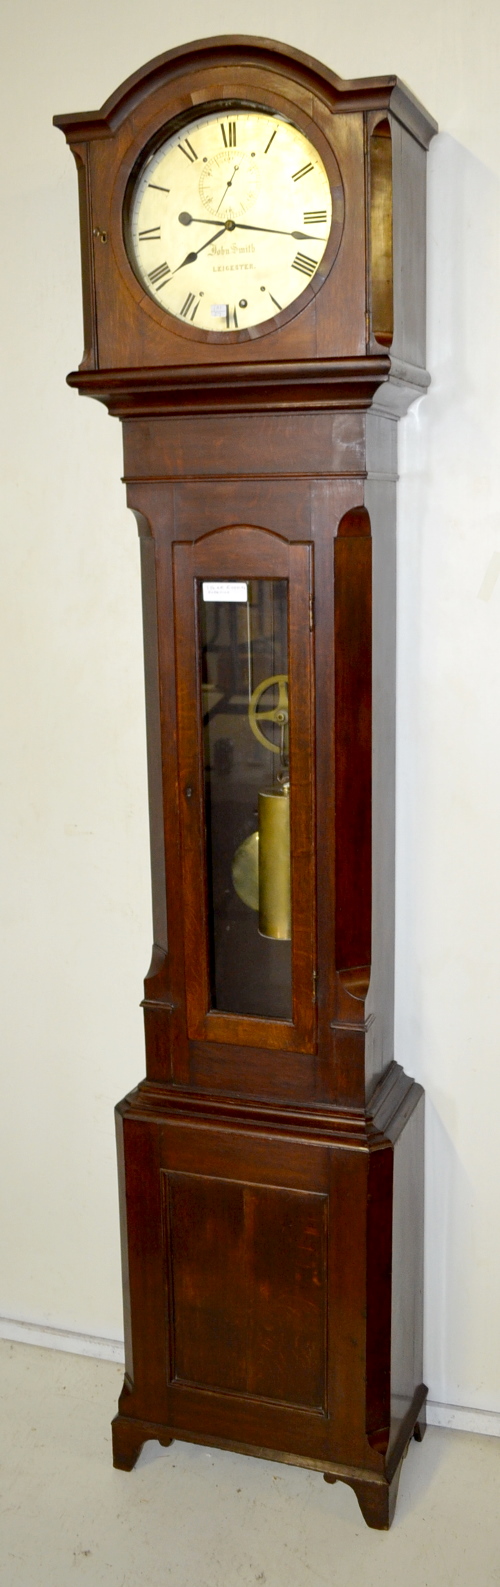 Antique “John Smith, Leicester” Tall Case Clock, 1 Year